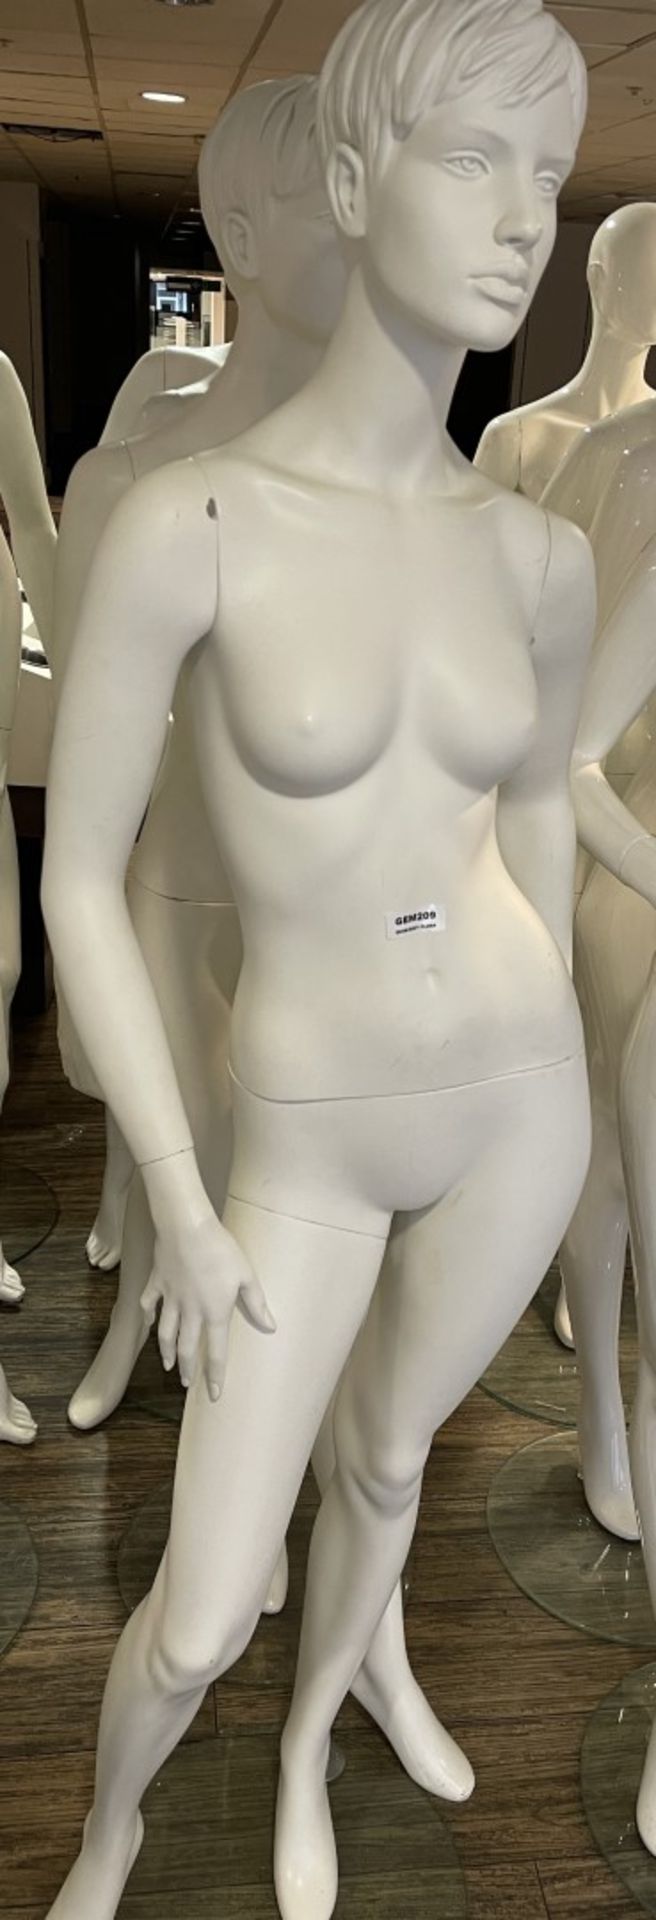 4 x Full Size Female Mannequins on Stands - CL670 - Ref: GEM209 - Location: Gravesend, DA11 - Image 3 of 9